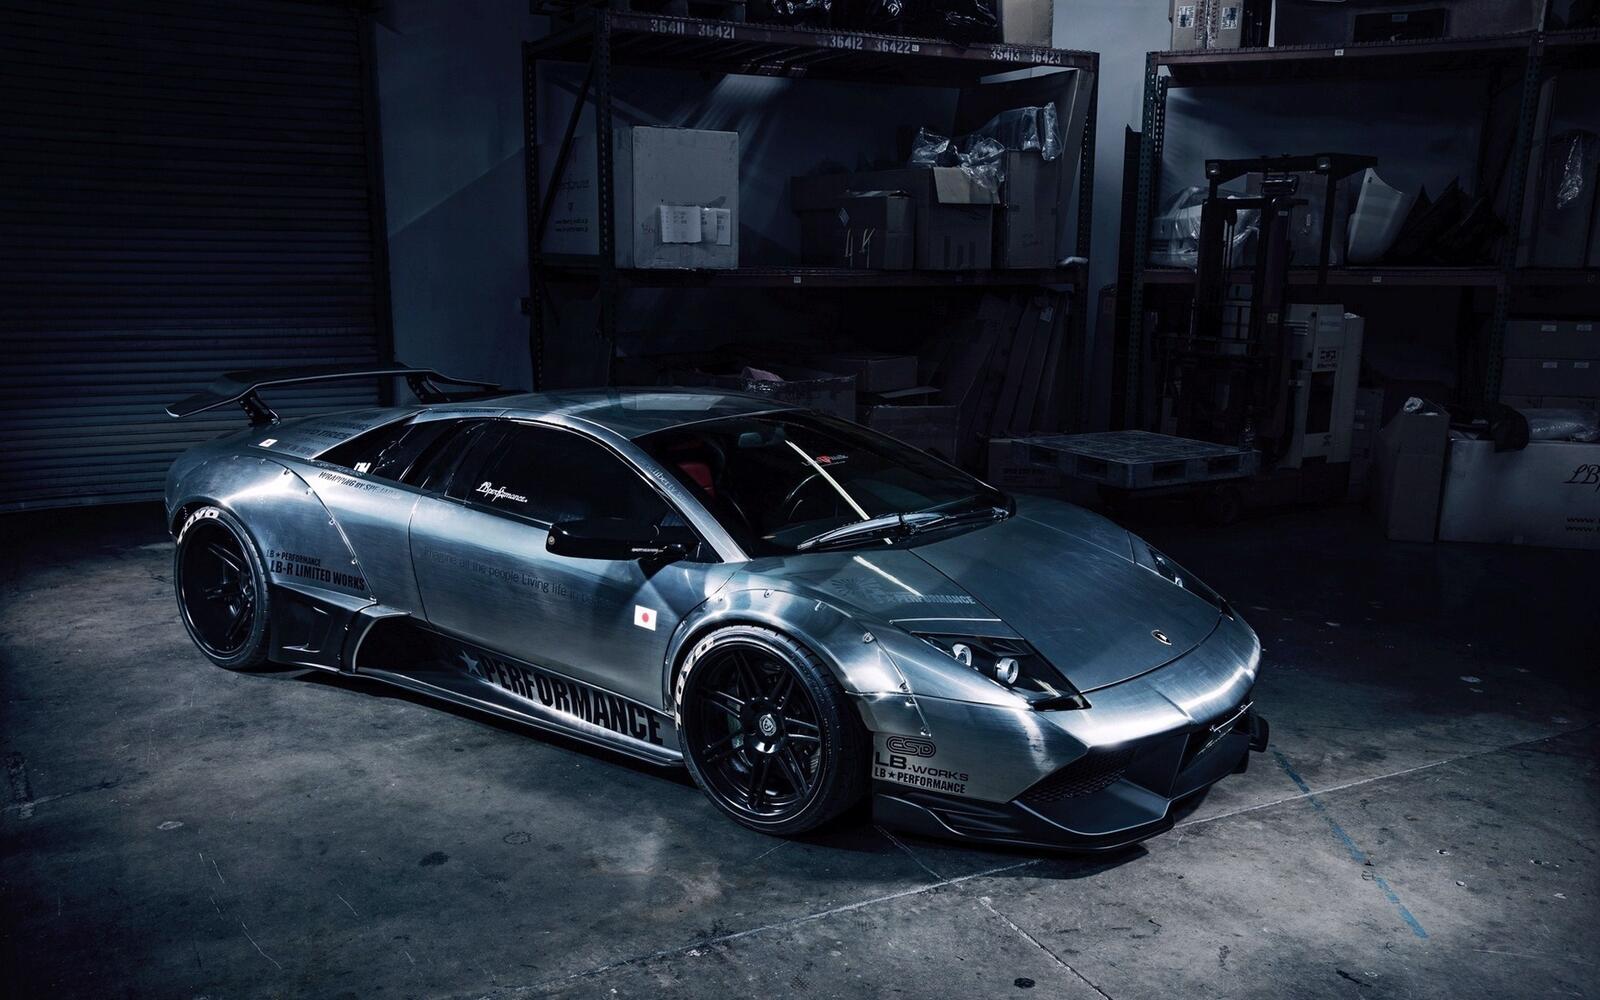 Free photo A metallic-colored Lamborghini in a dark garage.